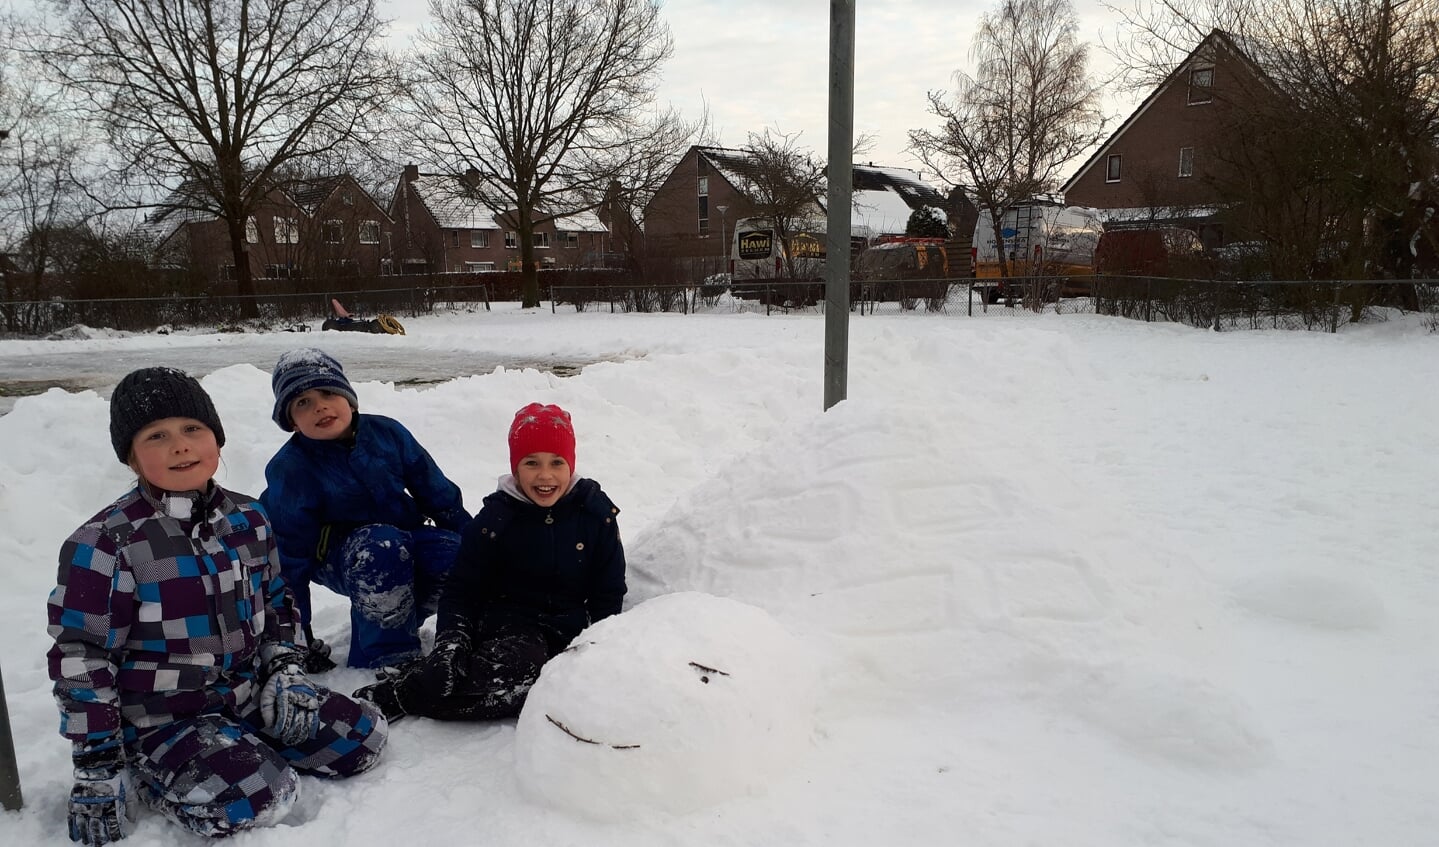 Noa Wunderink, Jorik en Marit Loman maakten een sneeuwschildpad. Foto: Charlotte Loman